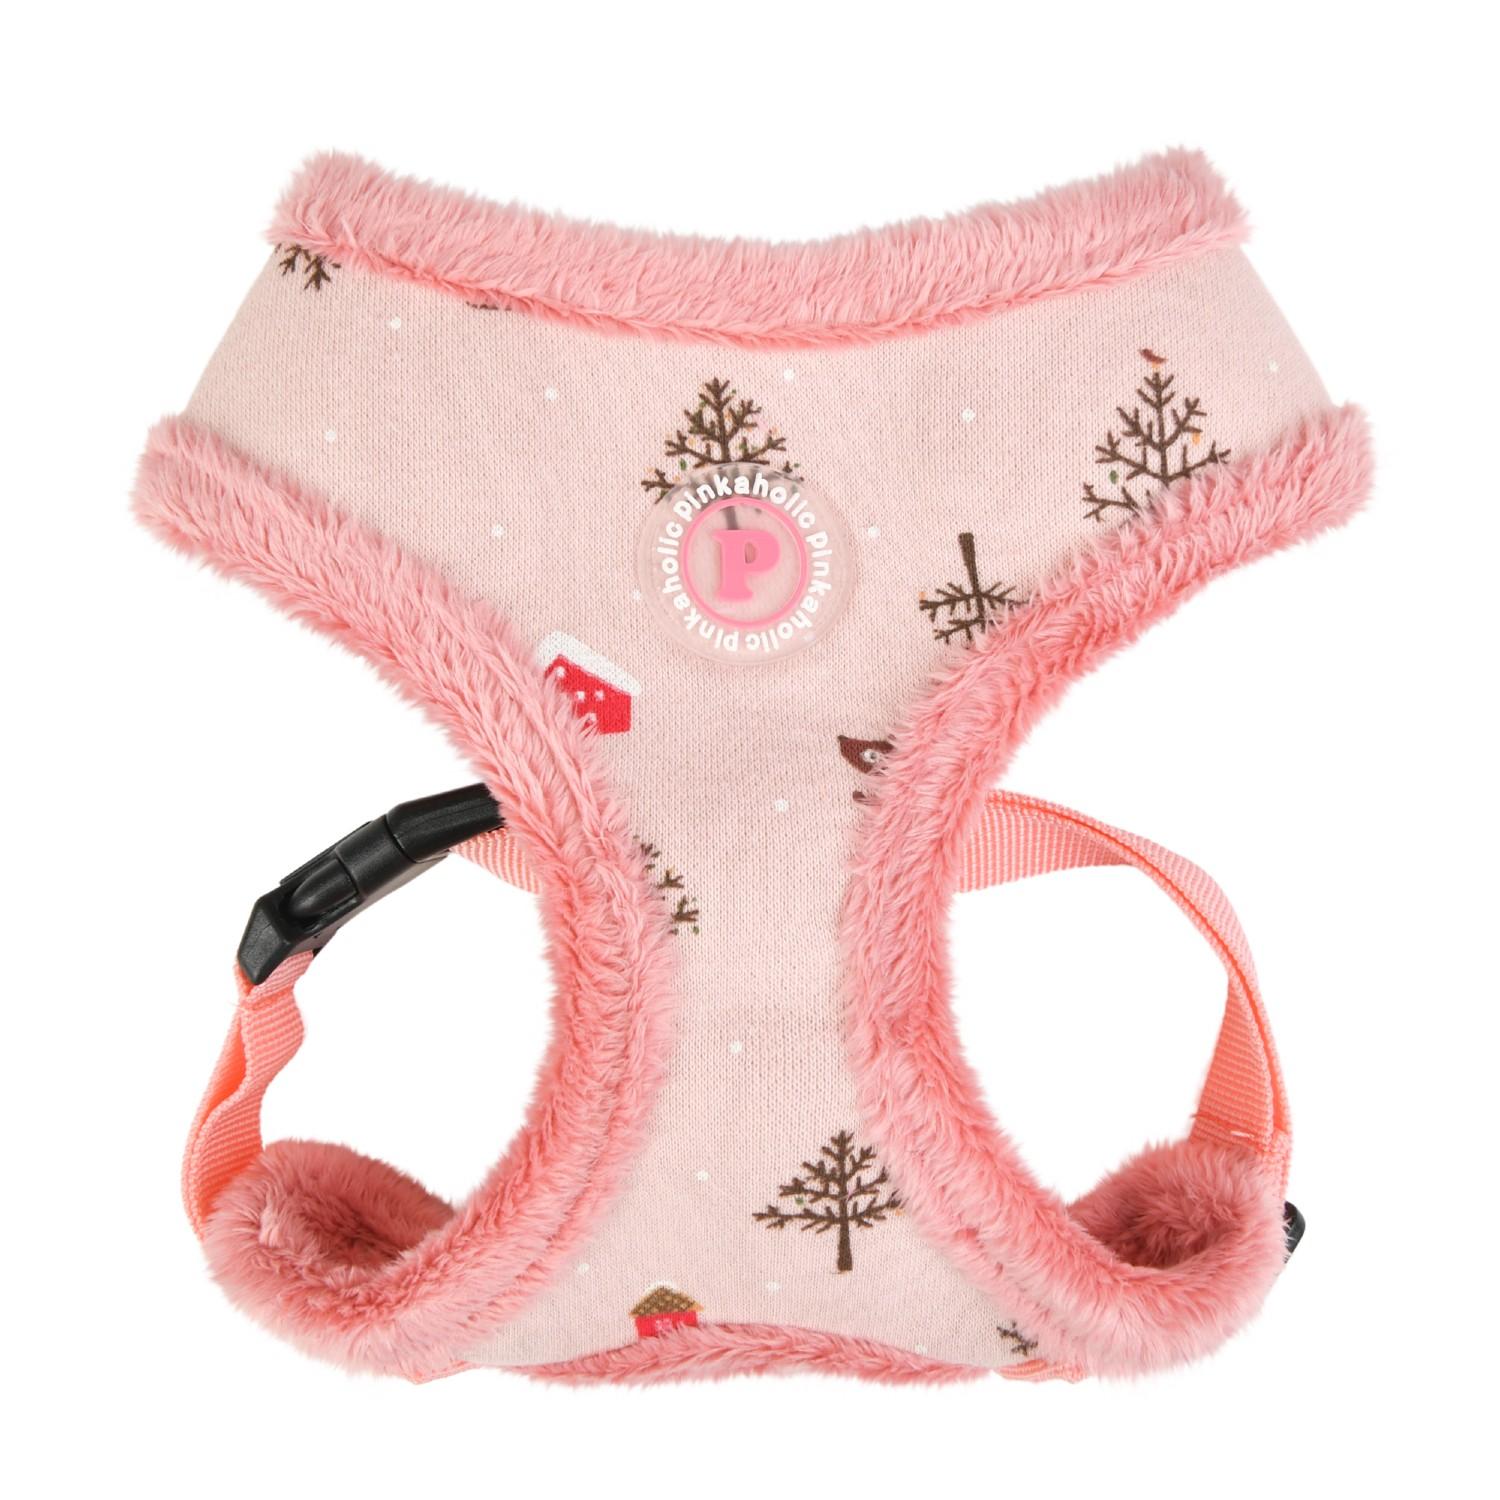 Eira Basic Style Dog Harness by Pinkaholic - Indian Pink